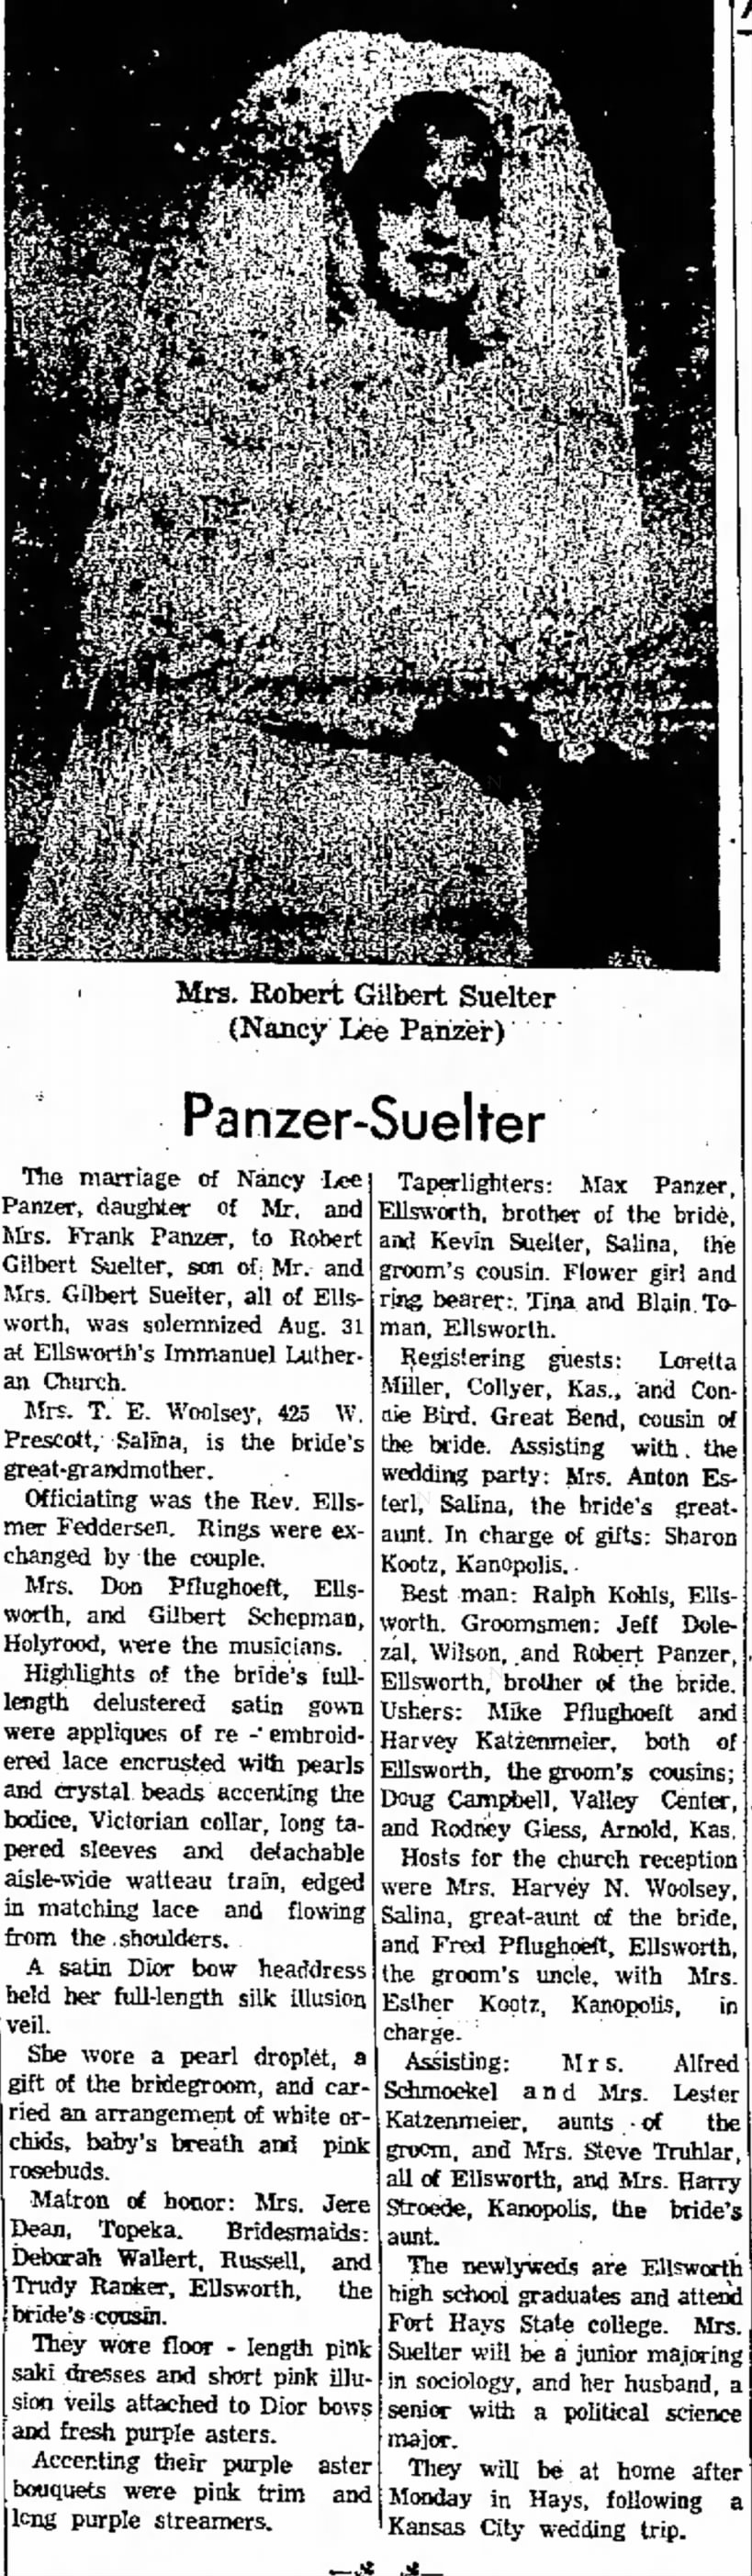 Nancy Lee Panzer Wedding